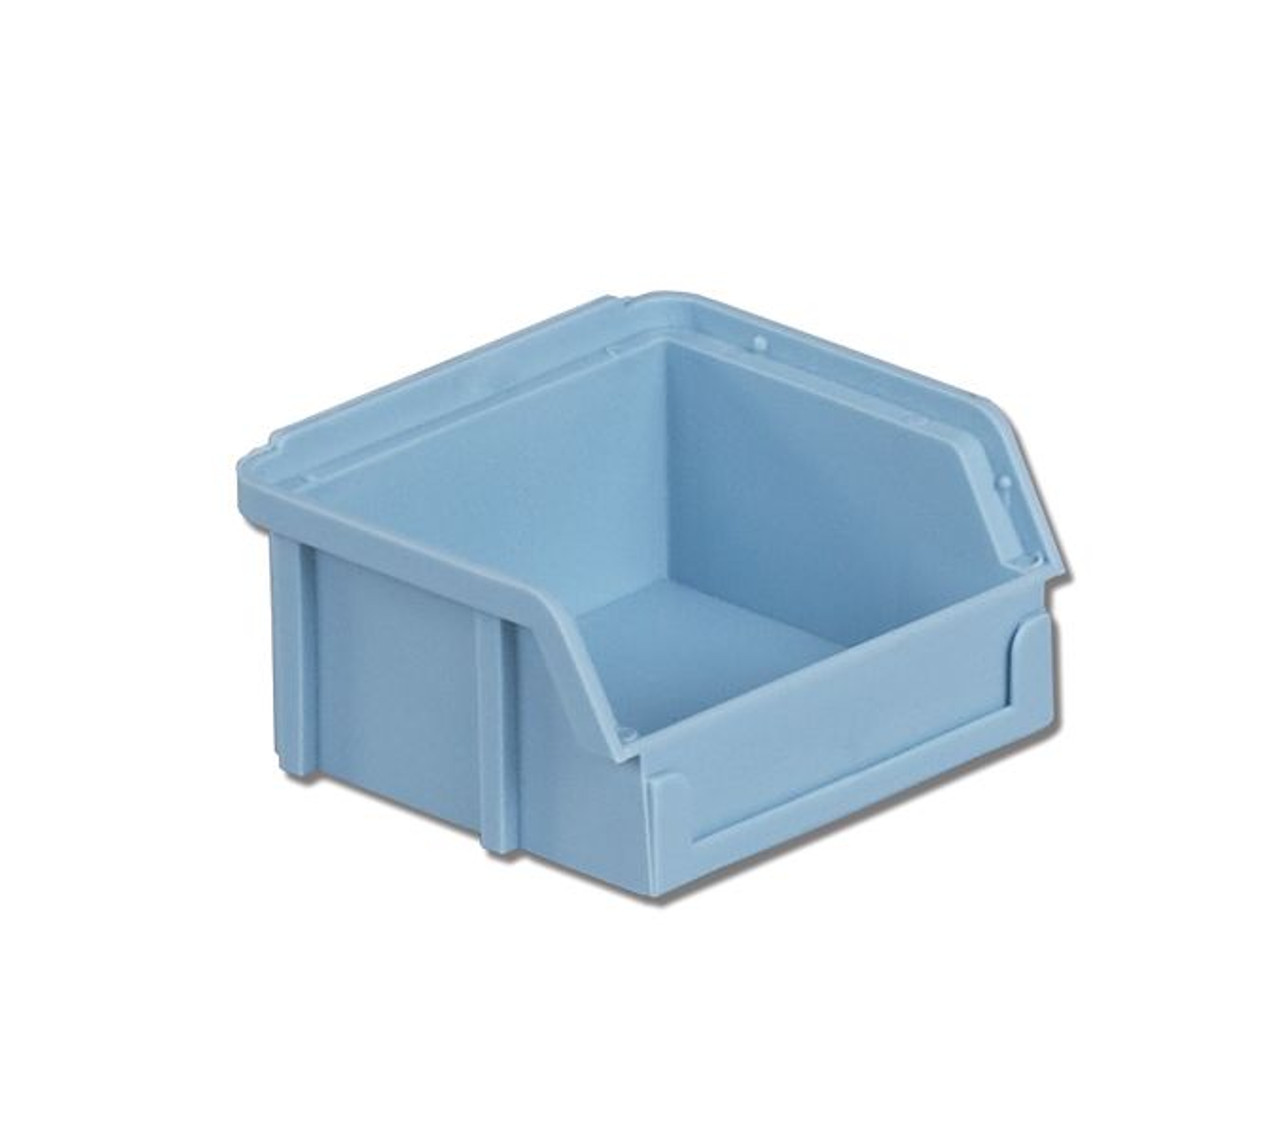 Plastibox Parts Bins: Stacking, Light Blue, 3.5Lx 4.0Wx 2.0H, 24/Case,  Price Per Case, LB-PB10-F - Cleanroom World